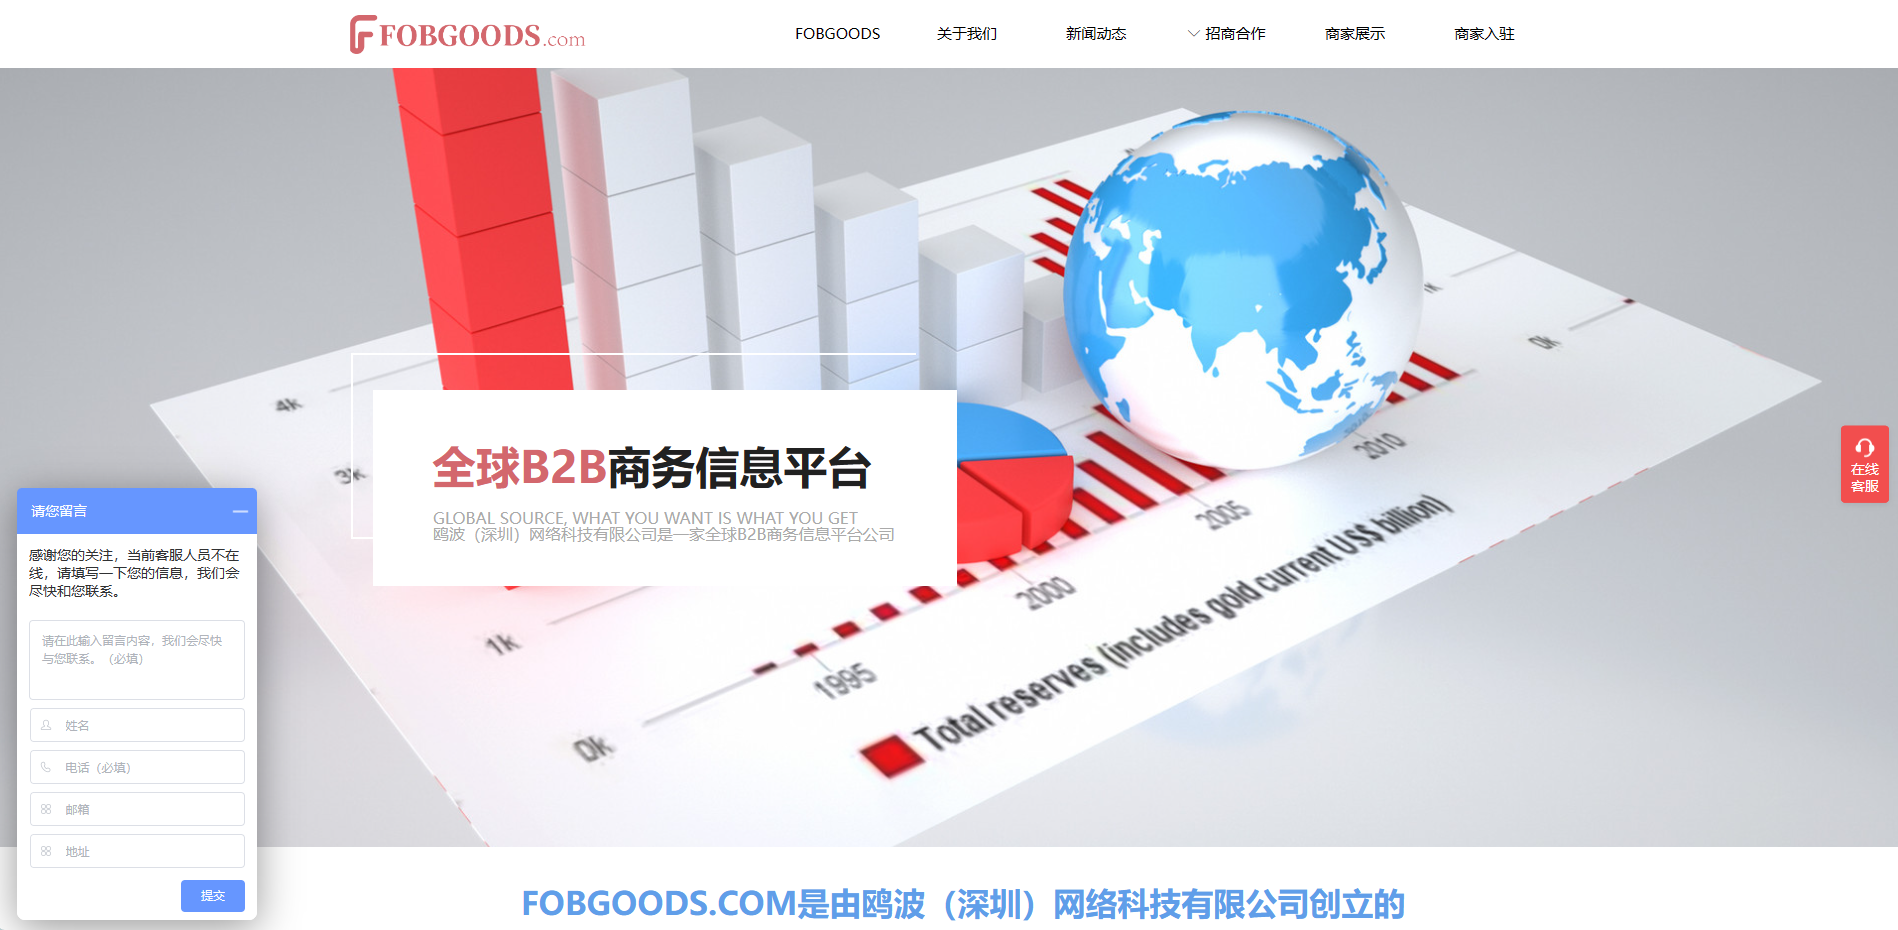 Fobgoods(全球B2B商务信息平台)